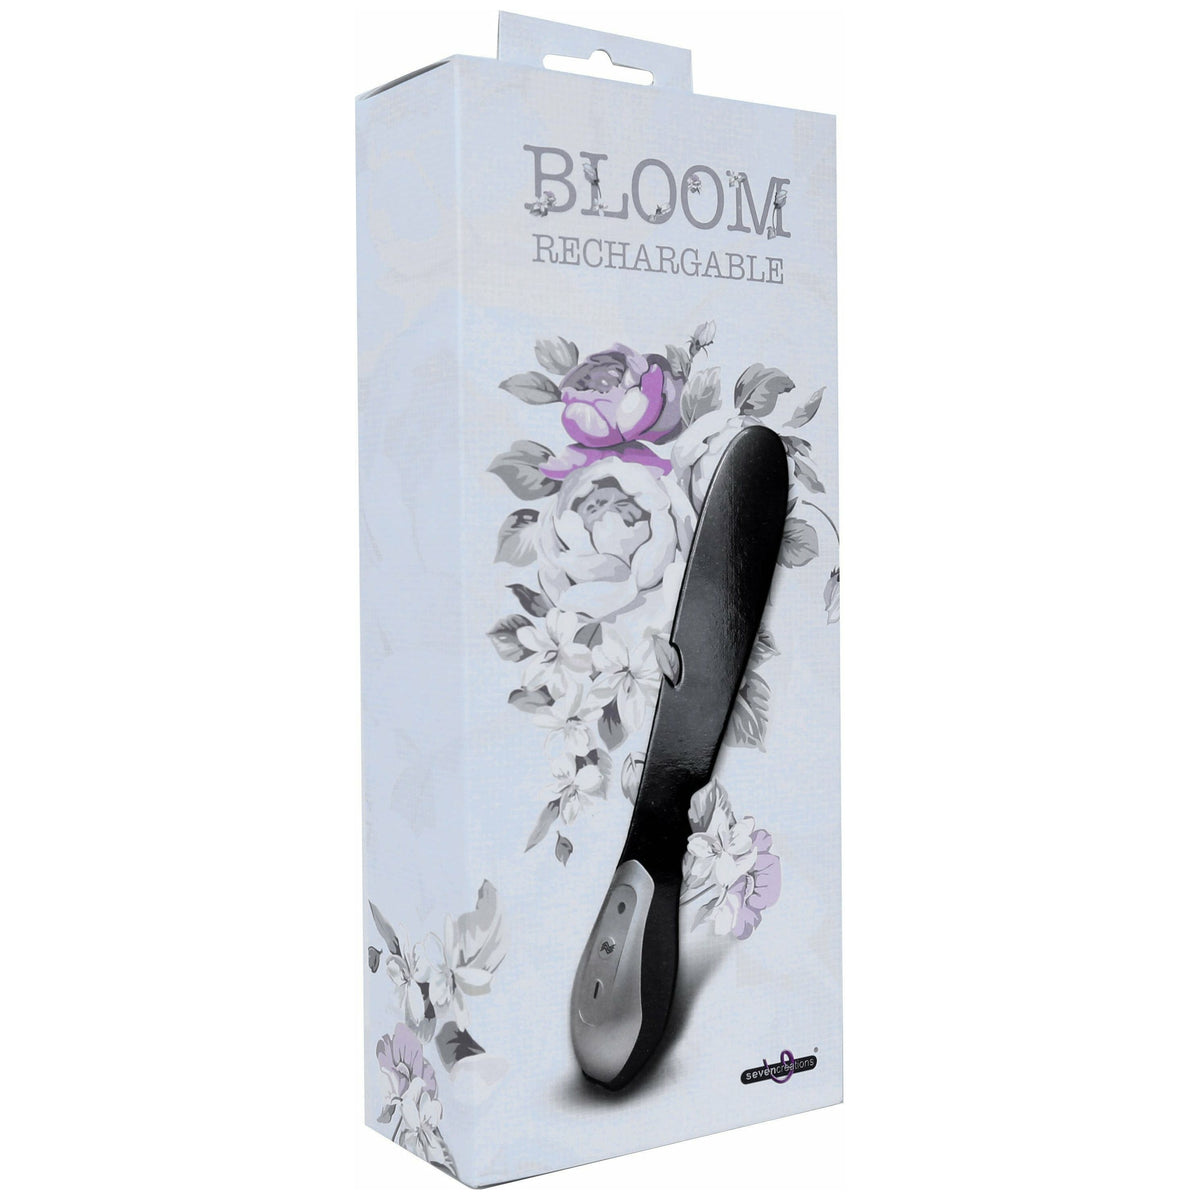 Bloom Rechargeable G-Spot Vibrator - Black